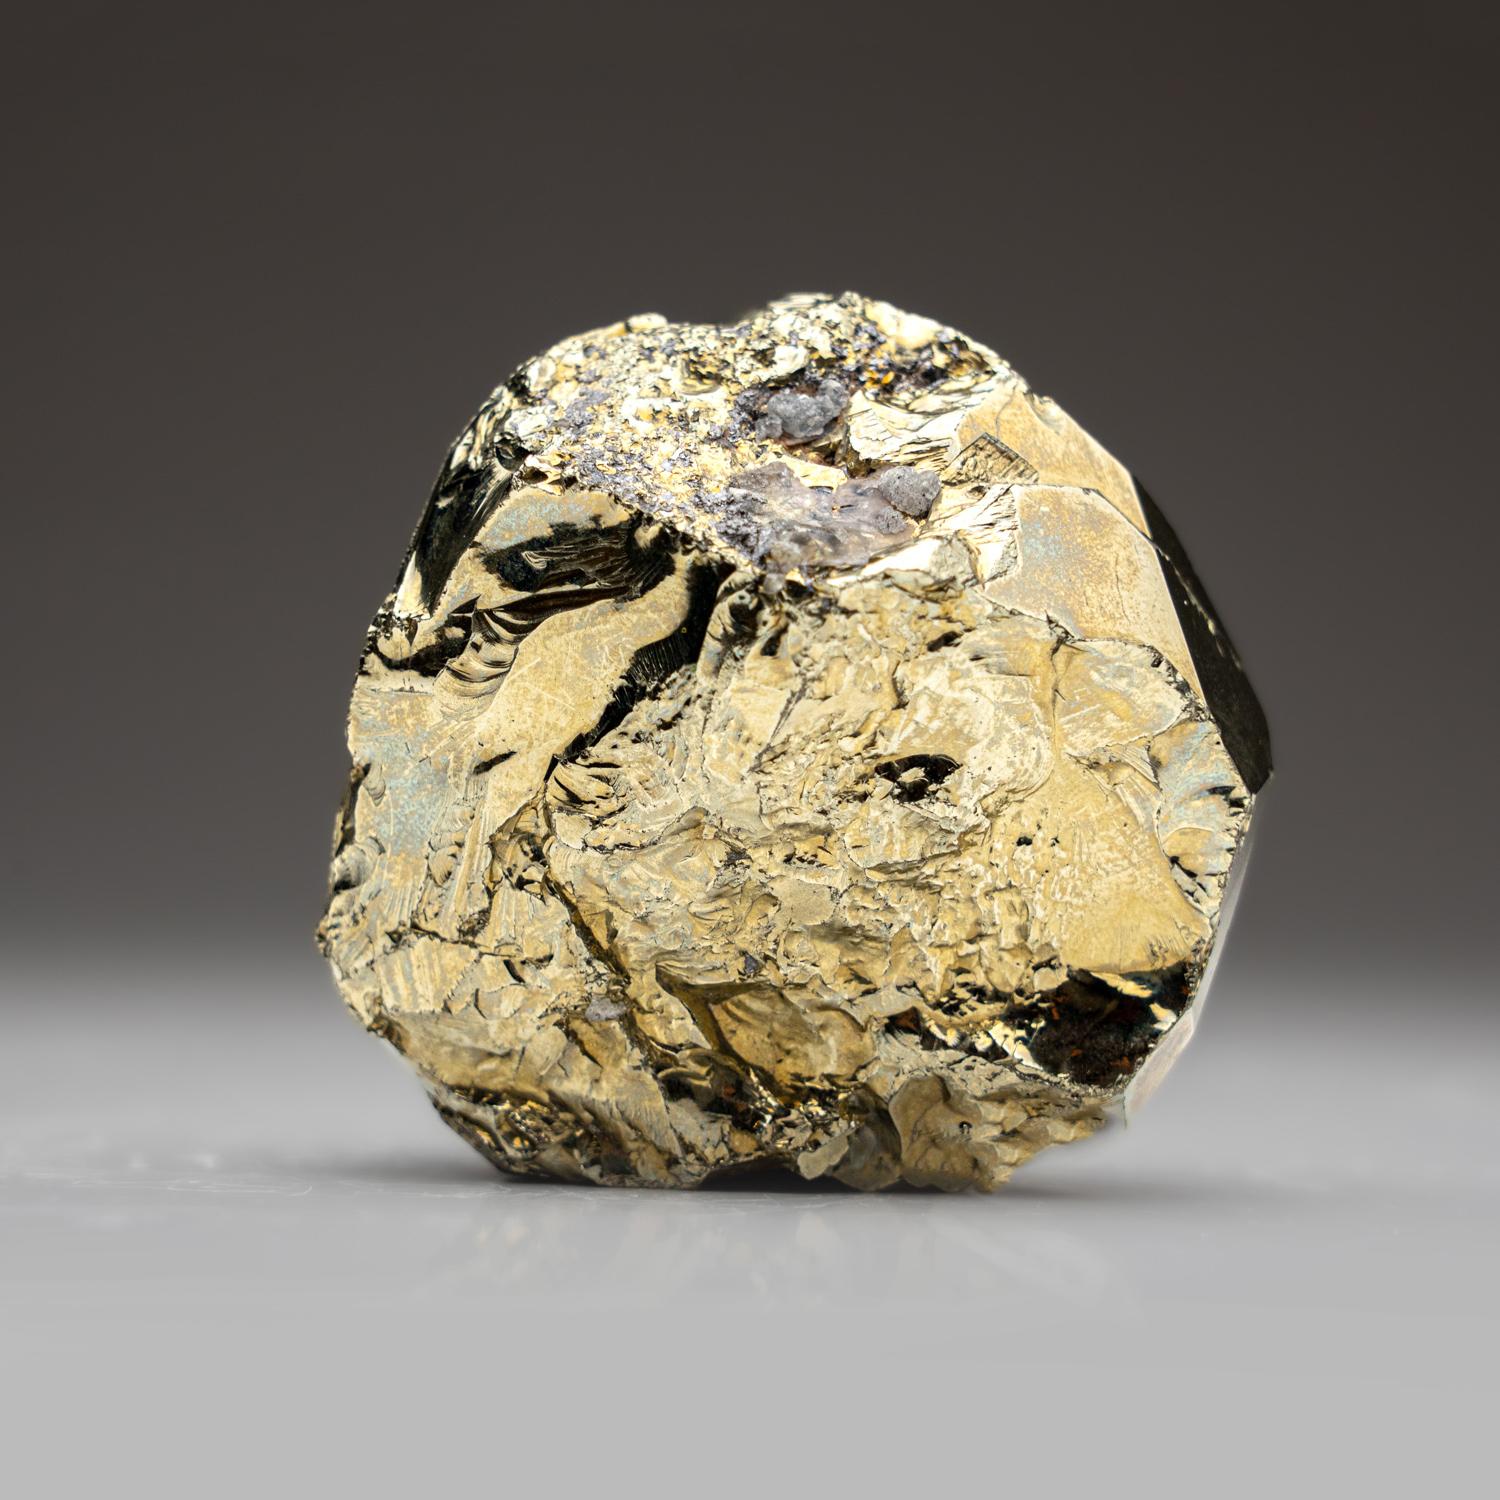 Crystal Pyrite from Huaron District, Cerro de Pasco Province, Pasco Department, Peru (47 For Sale